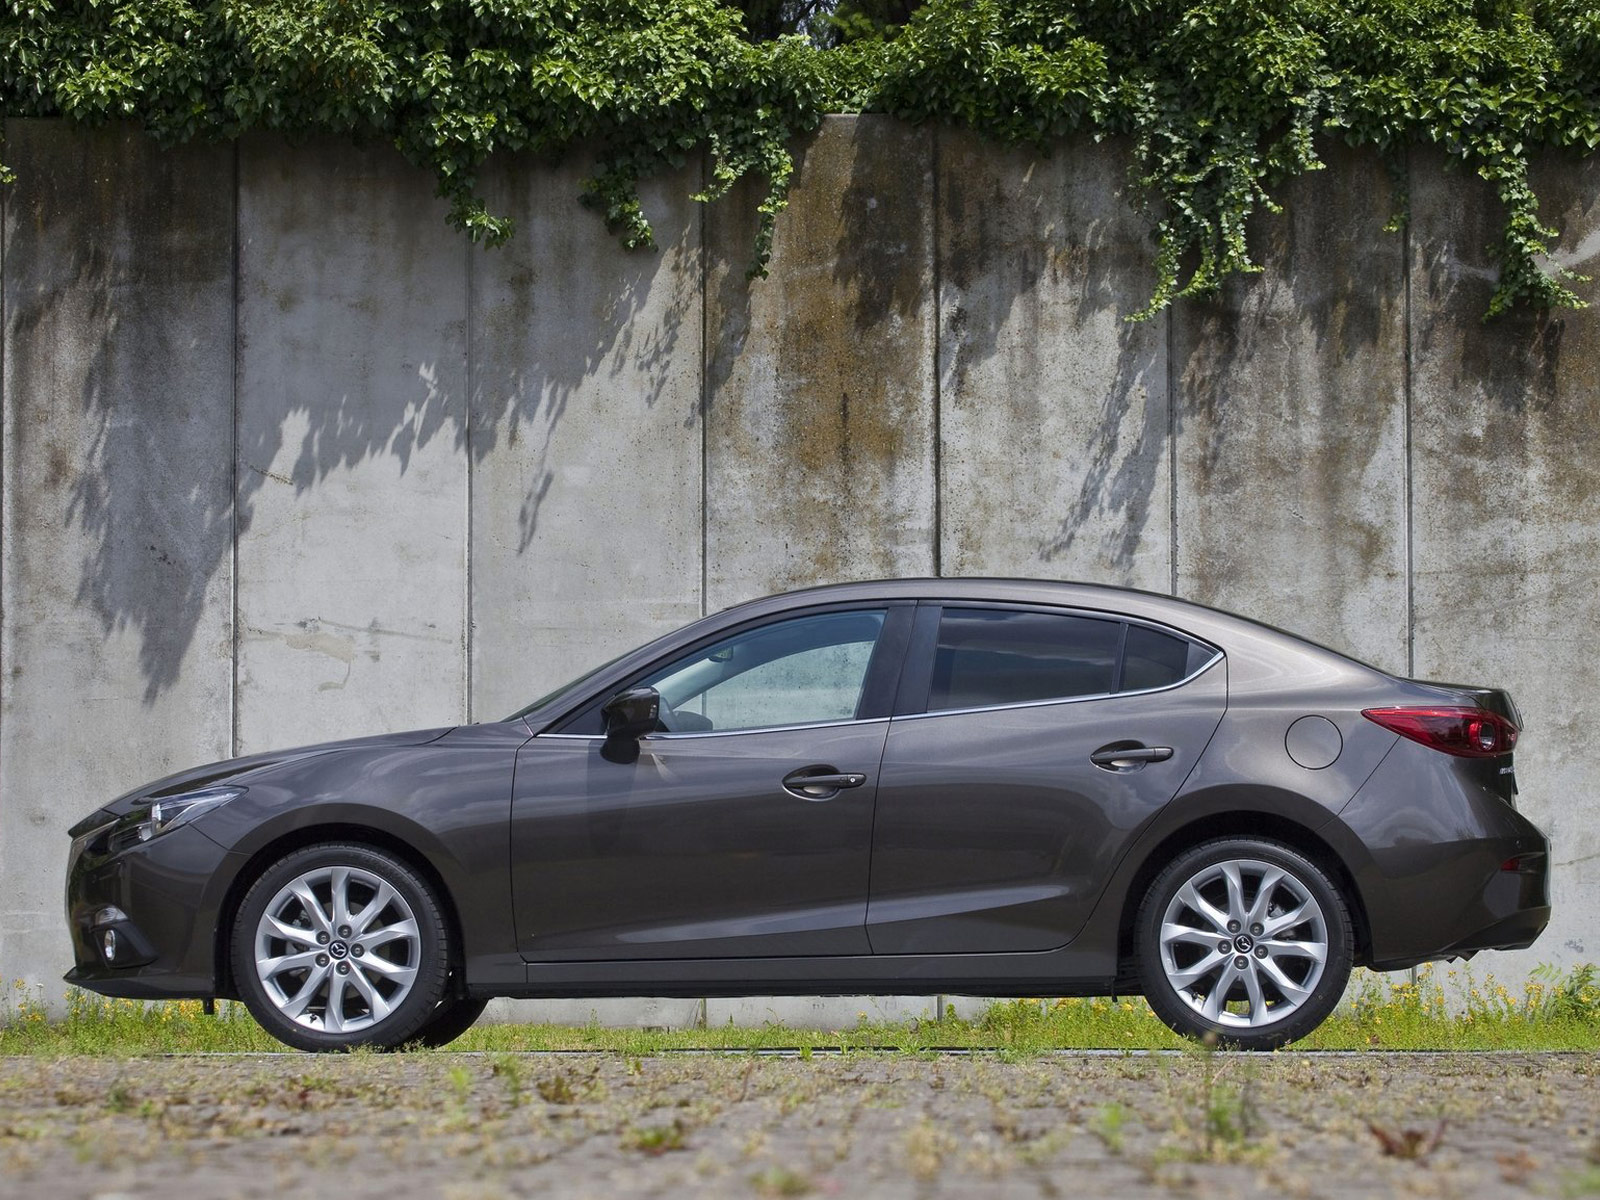 2014 Mazda 3 Sedan Japanese car photos, insurance information